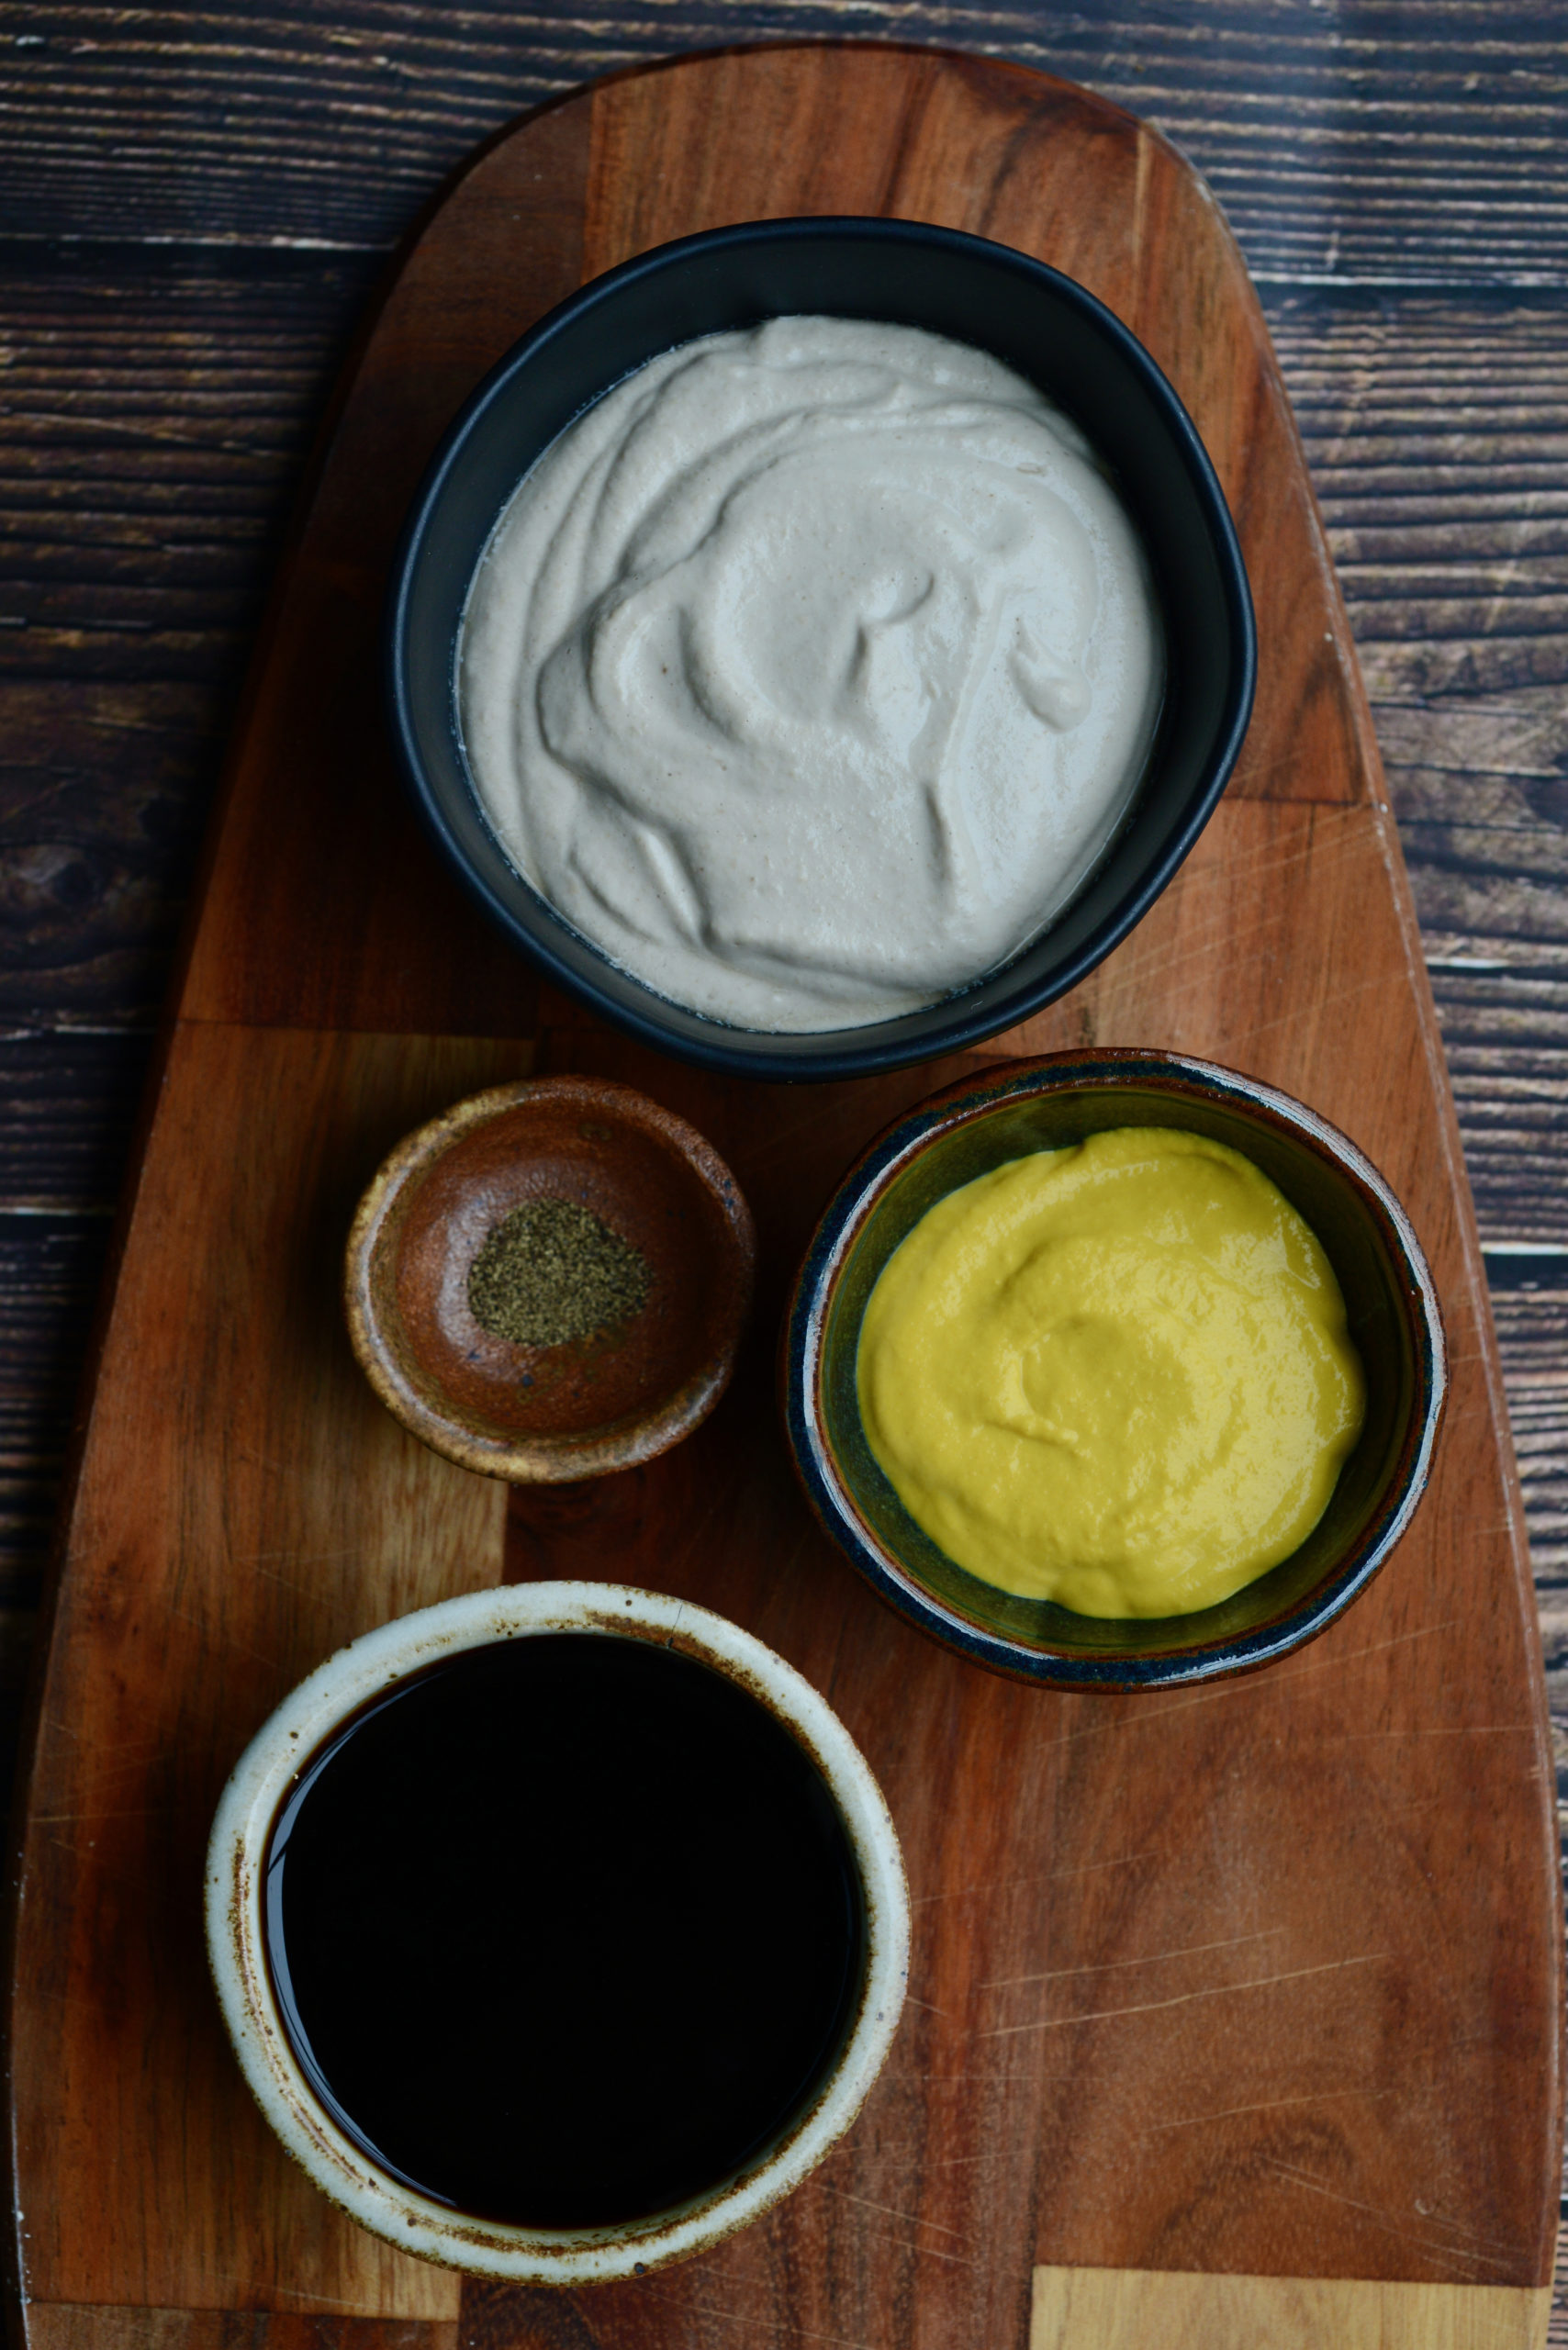 Honeyless Honey Mustard Vegan Dressing ingredients in bowls on wooden board (yogurt/sour cream, yellow mustard, black pepper, coconut aminos)